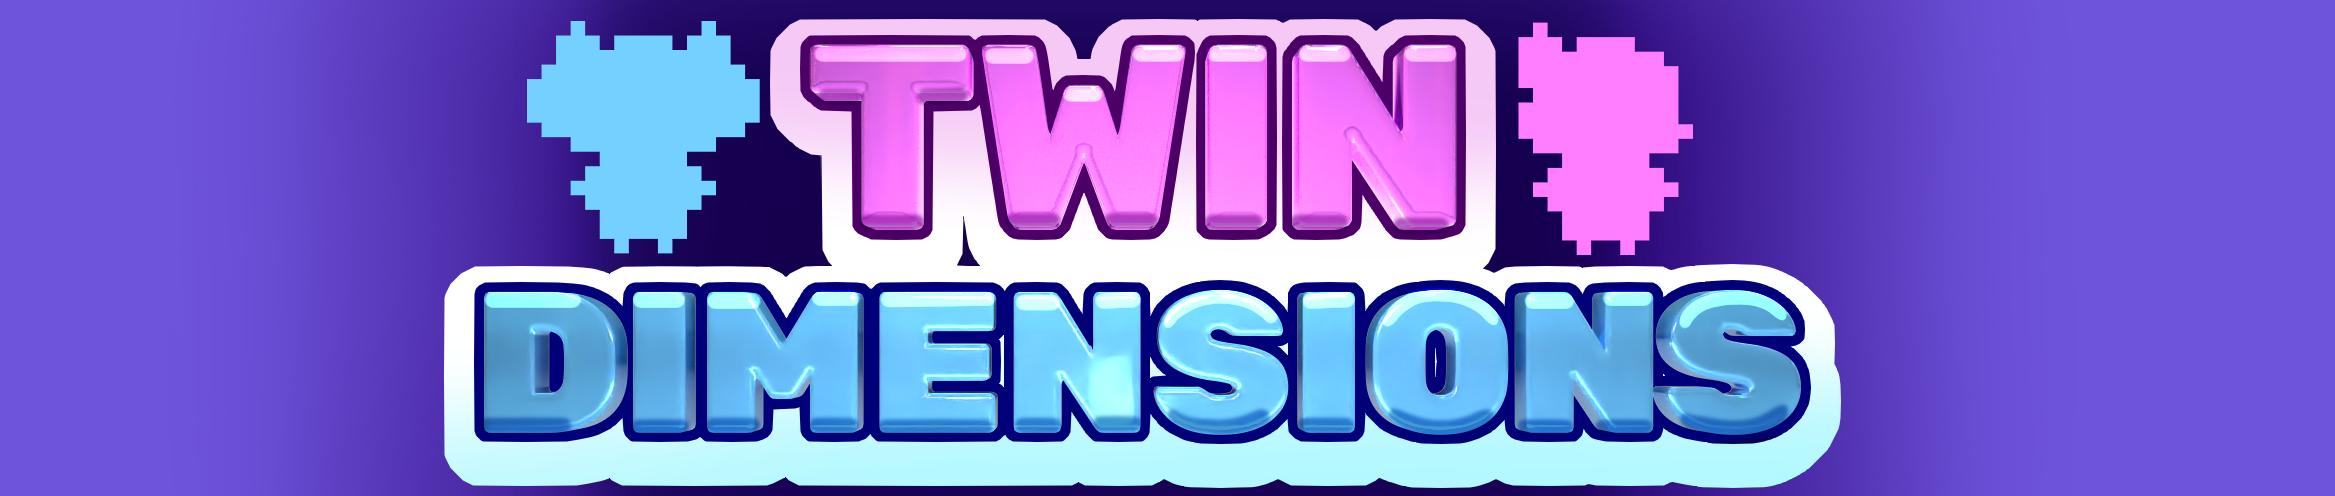 Twin Dimensions